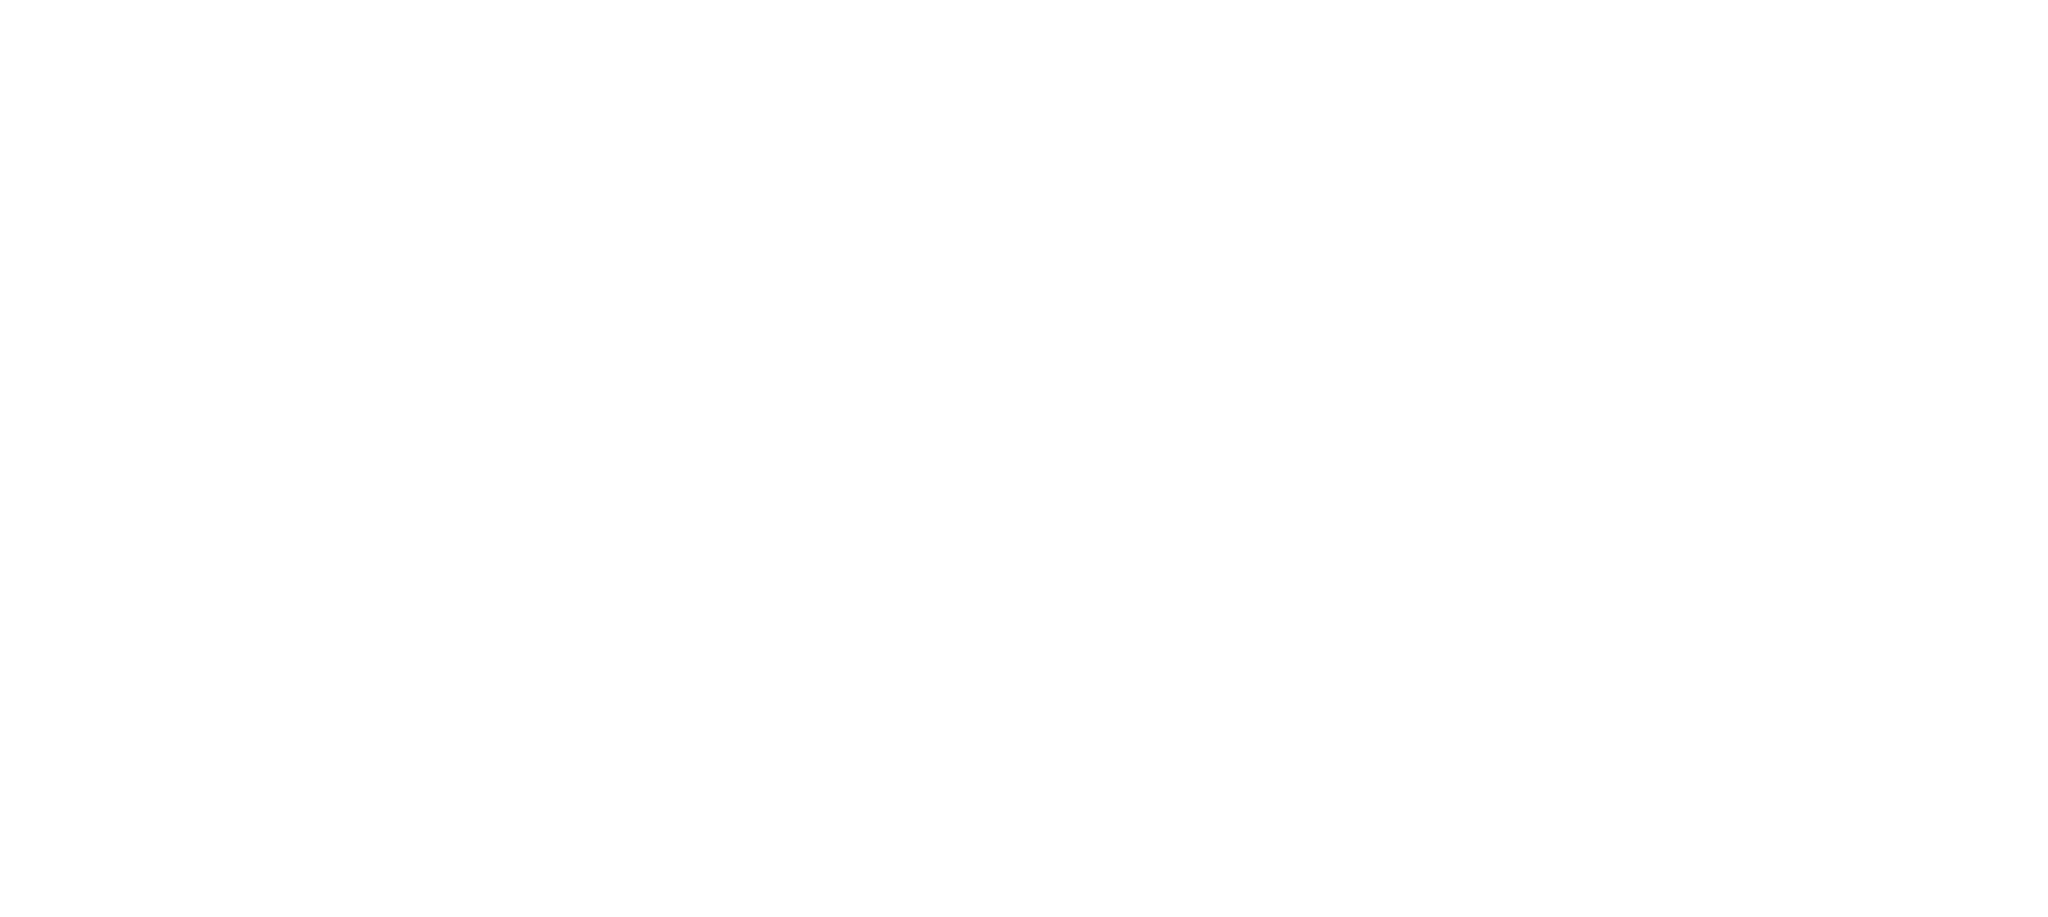 Pronote – Al jabr internationale